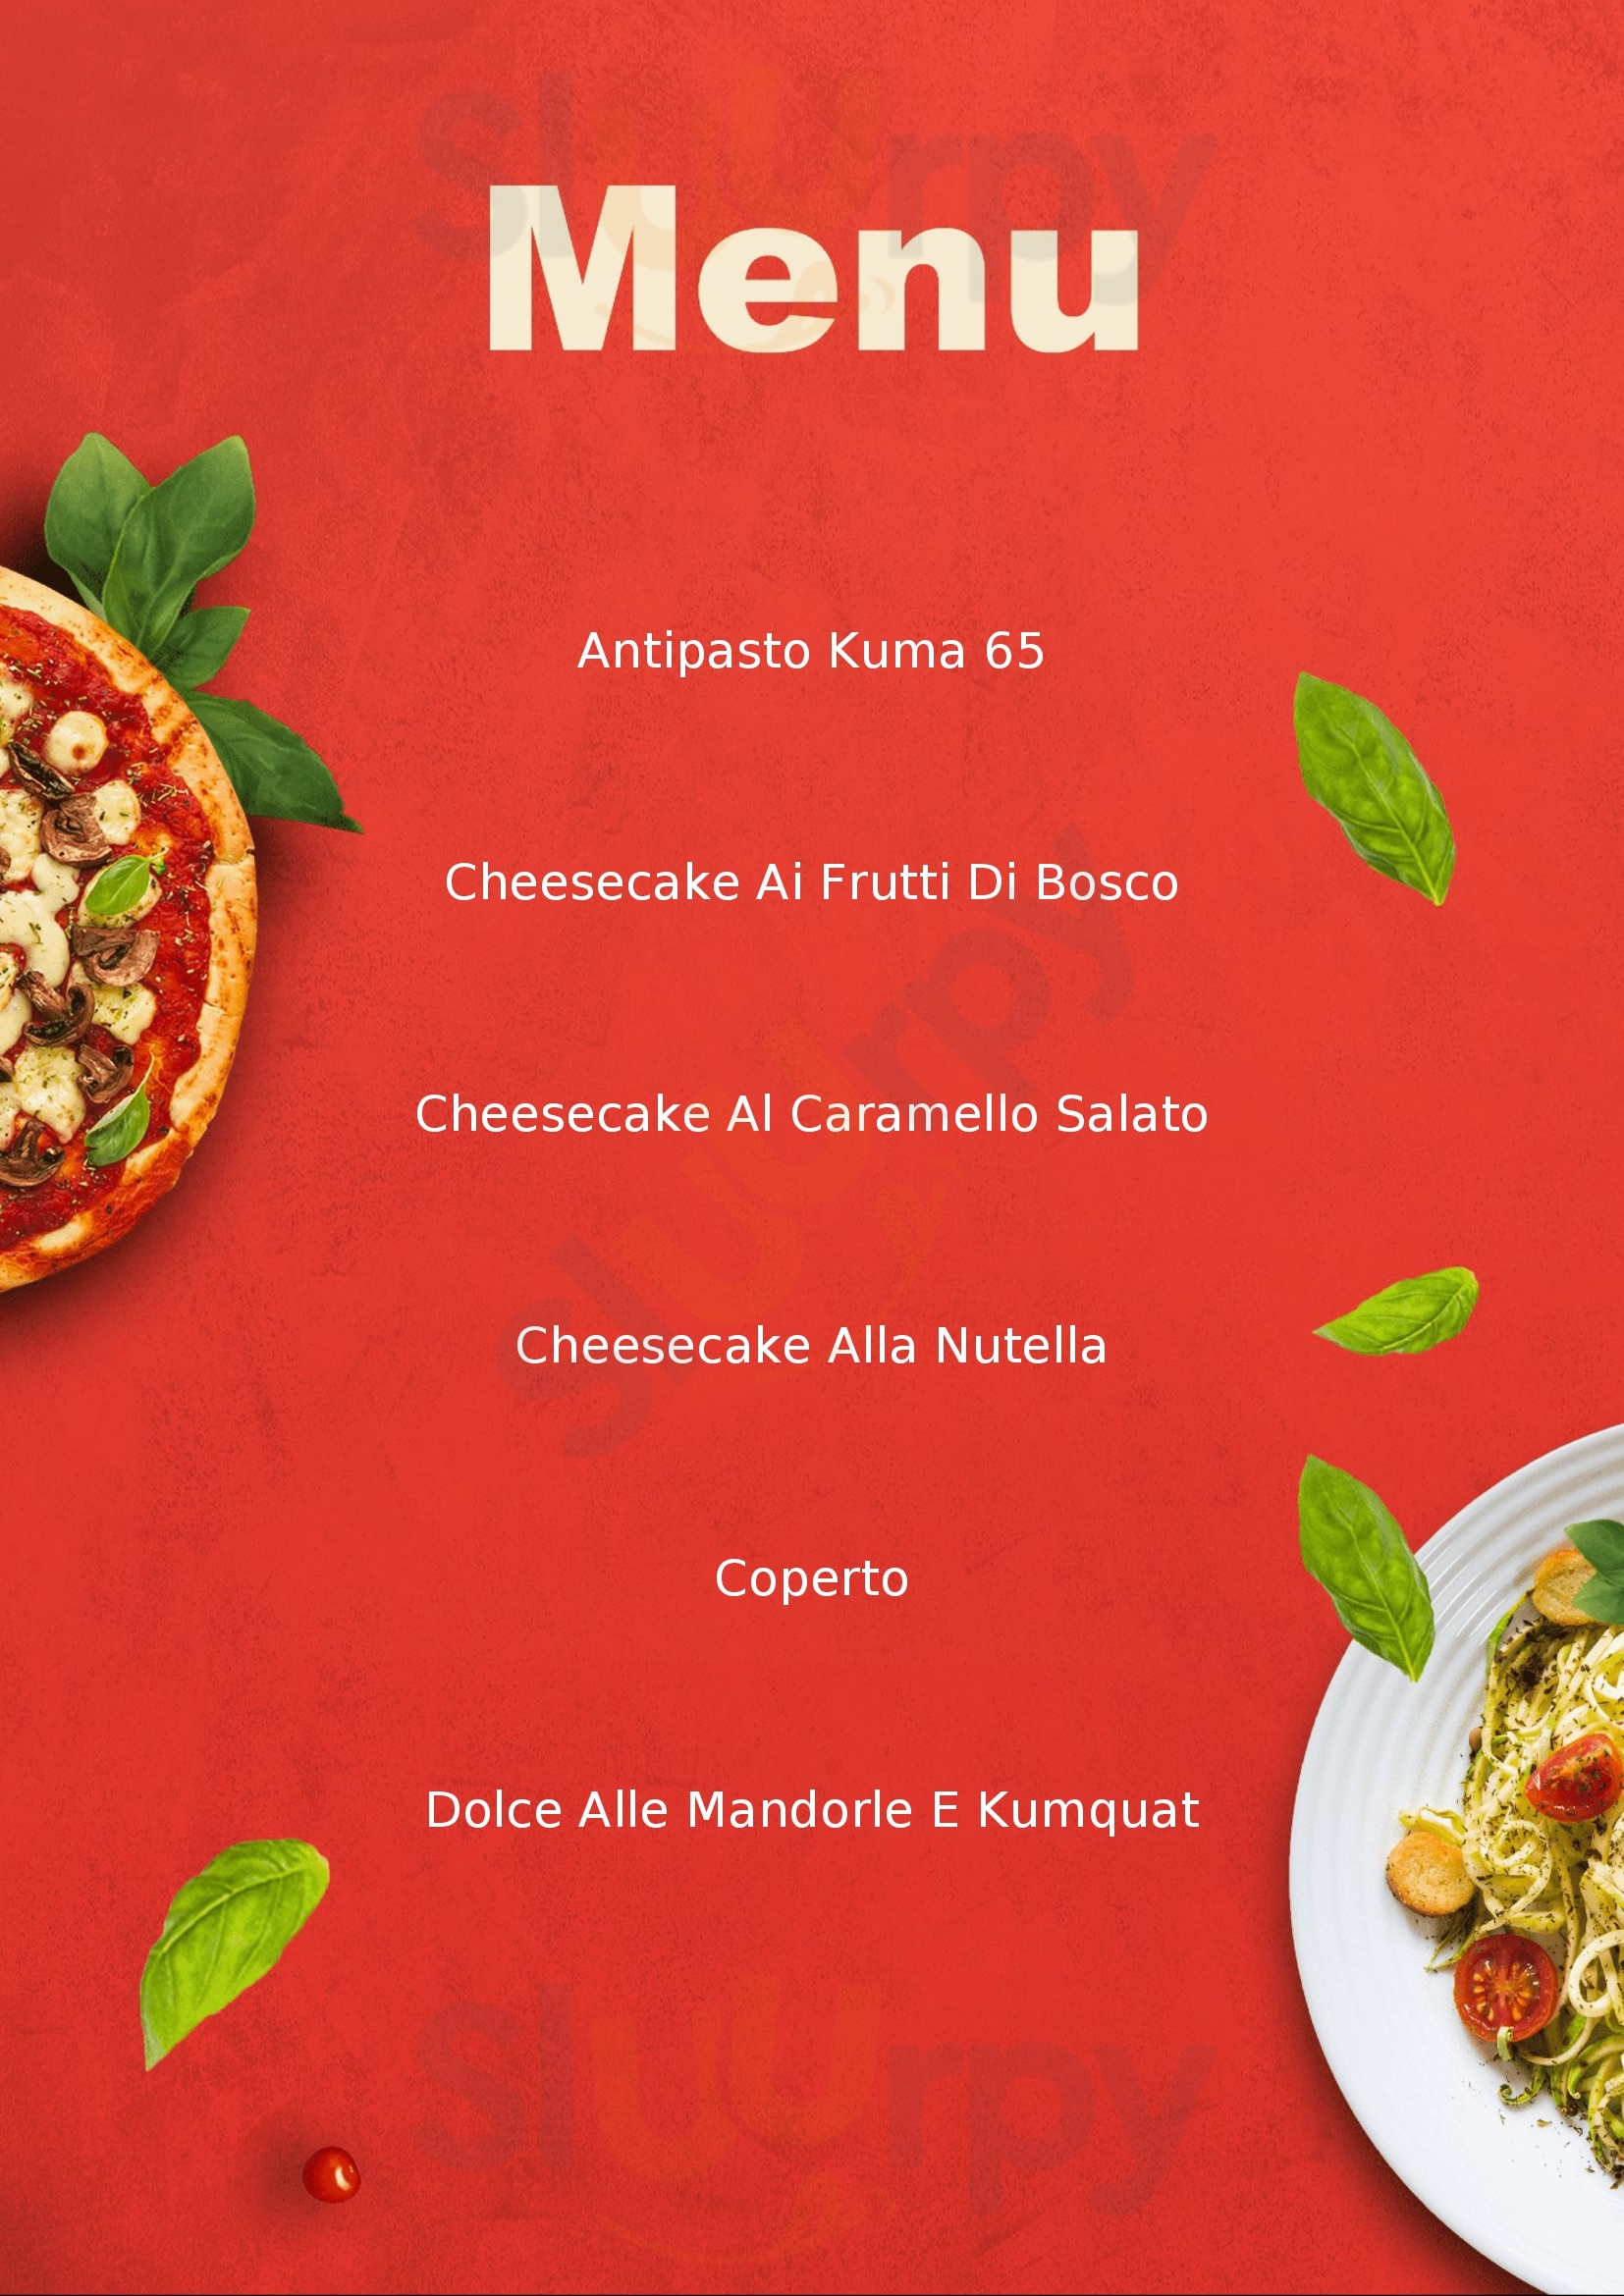 Kuma Pizza & Cucina Bacoli menù 1 pagina